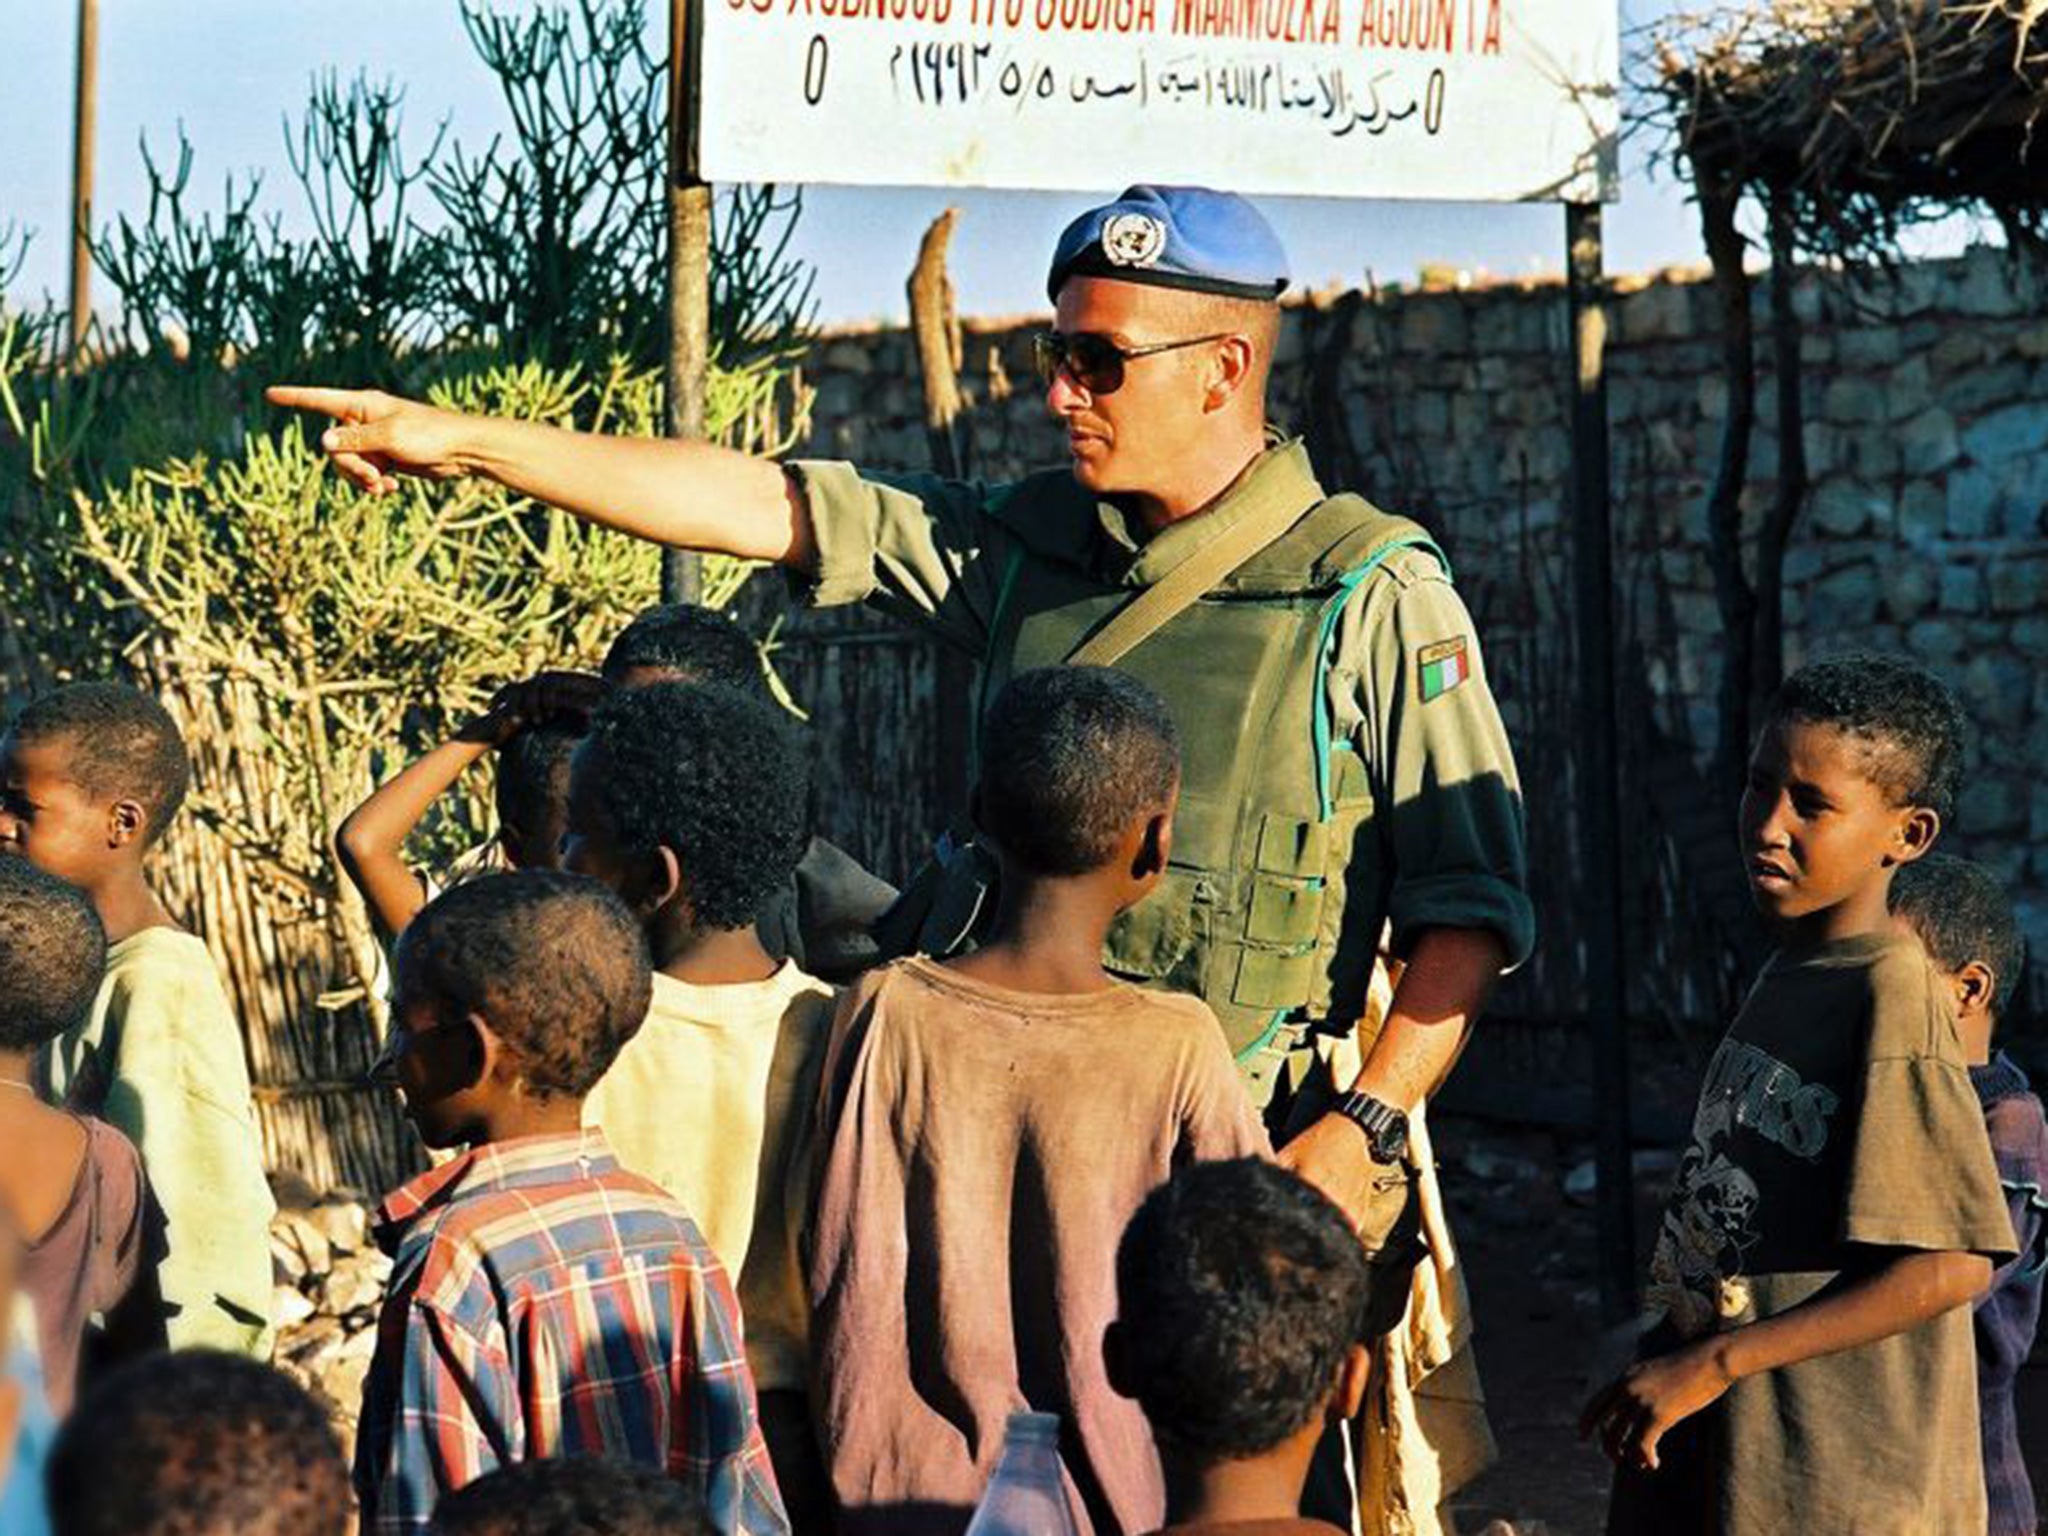 Paul Hopkins working as an Irish Army Ranger in Somalia in 1993